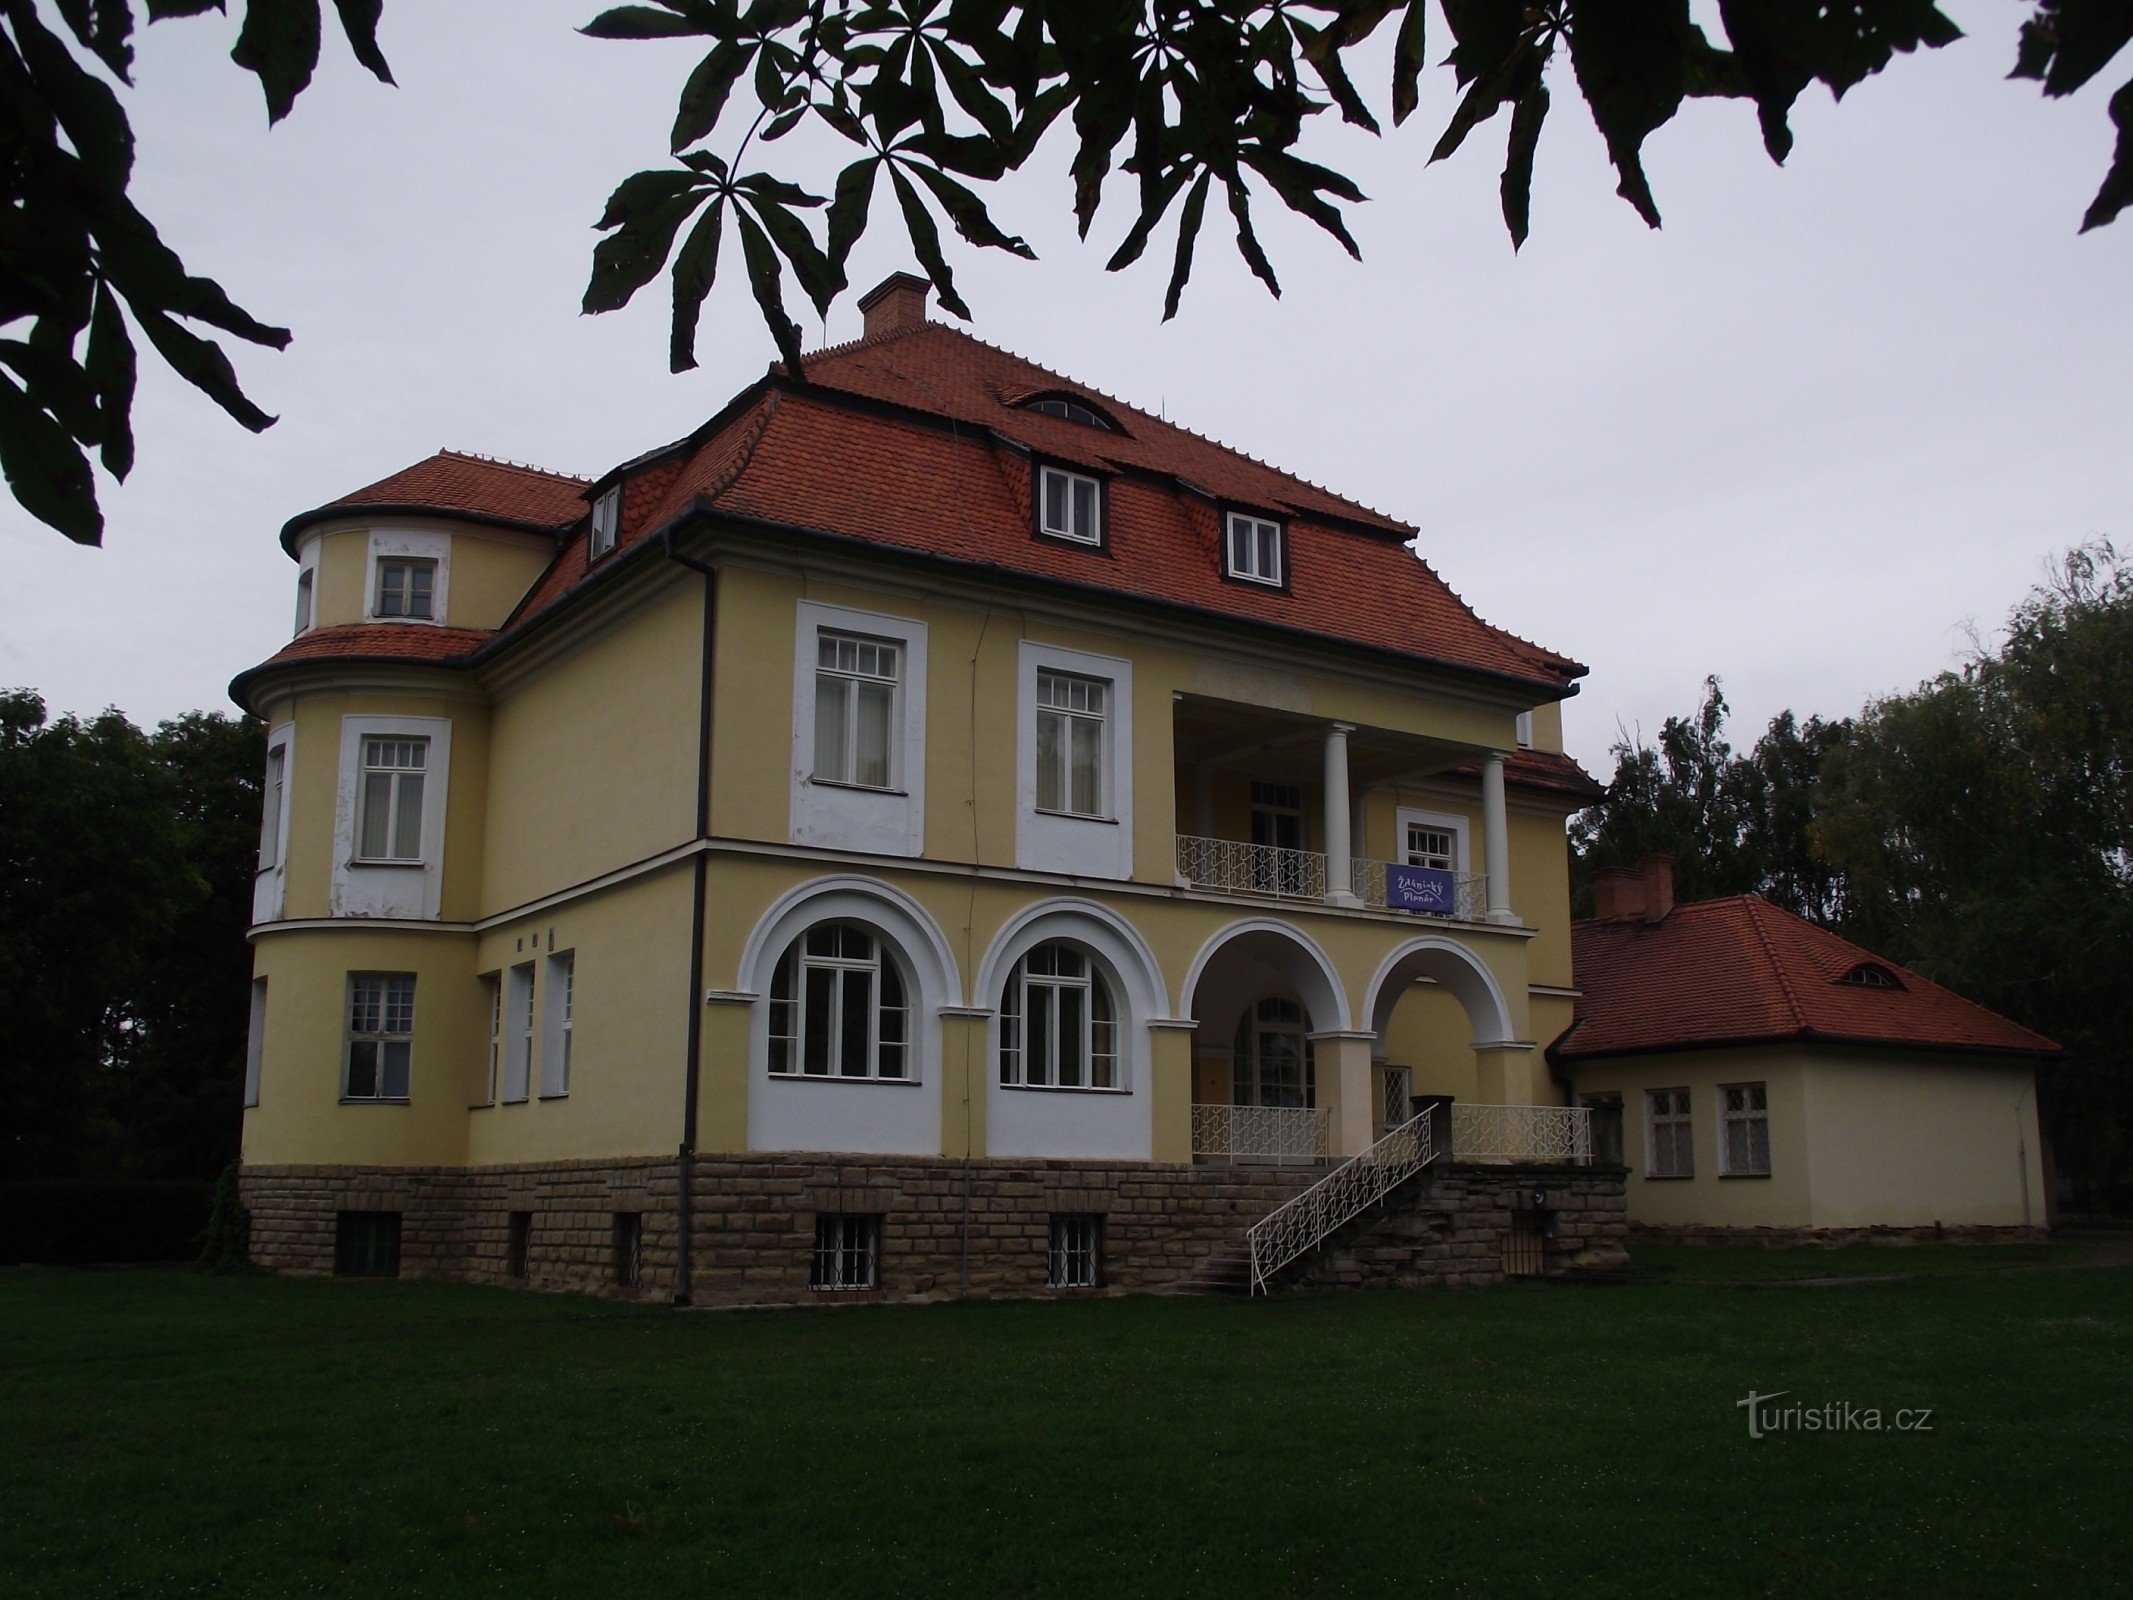 Ždánice – castle (Seidl's / Loudon's) villa